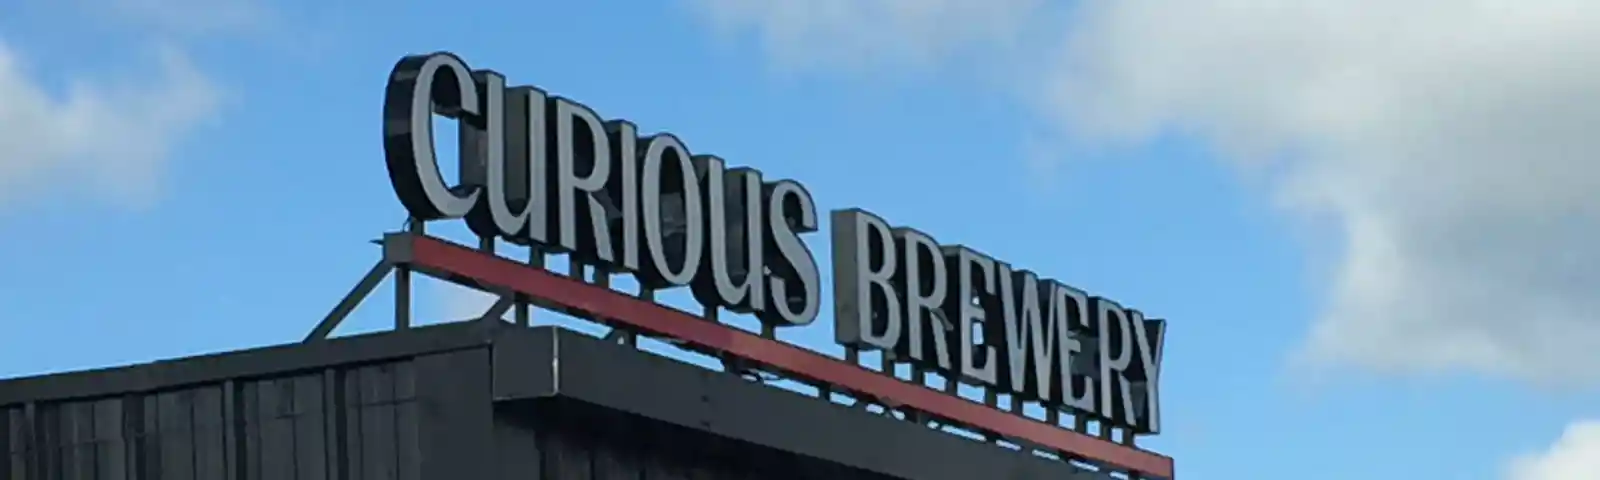 Curious Brewery May 2019 AH.jpg